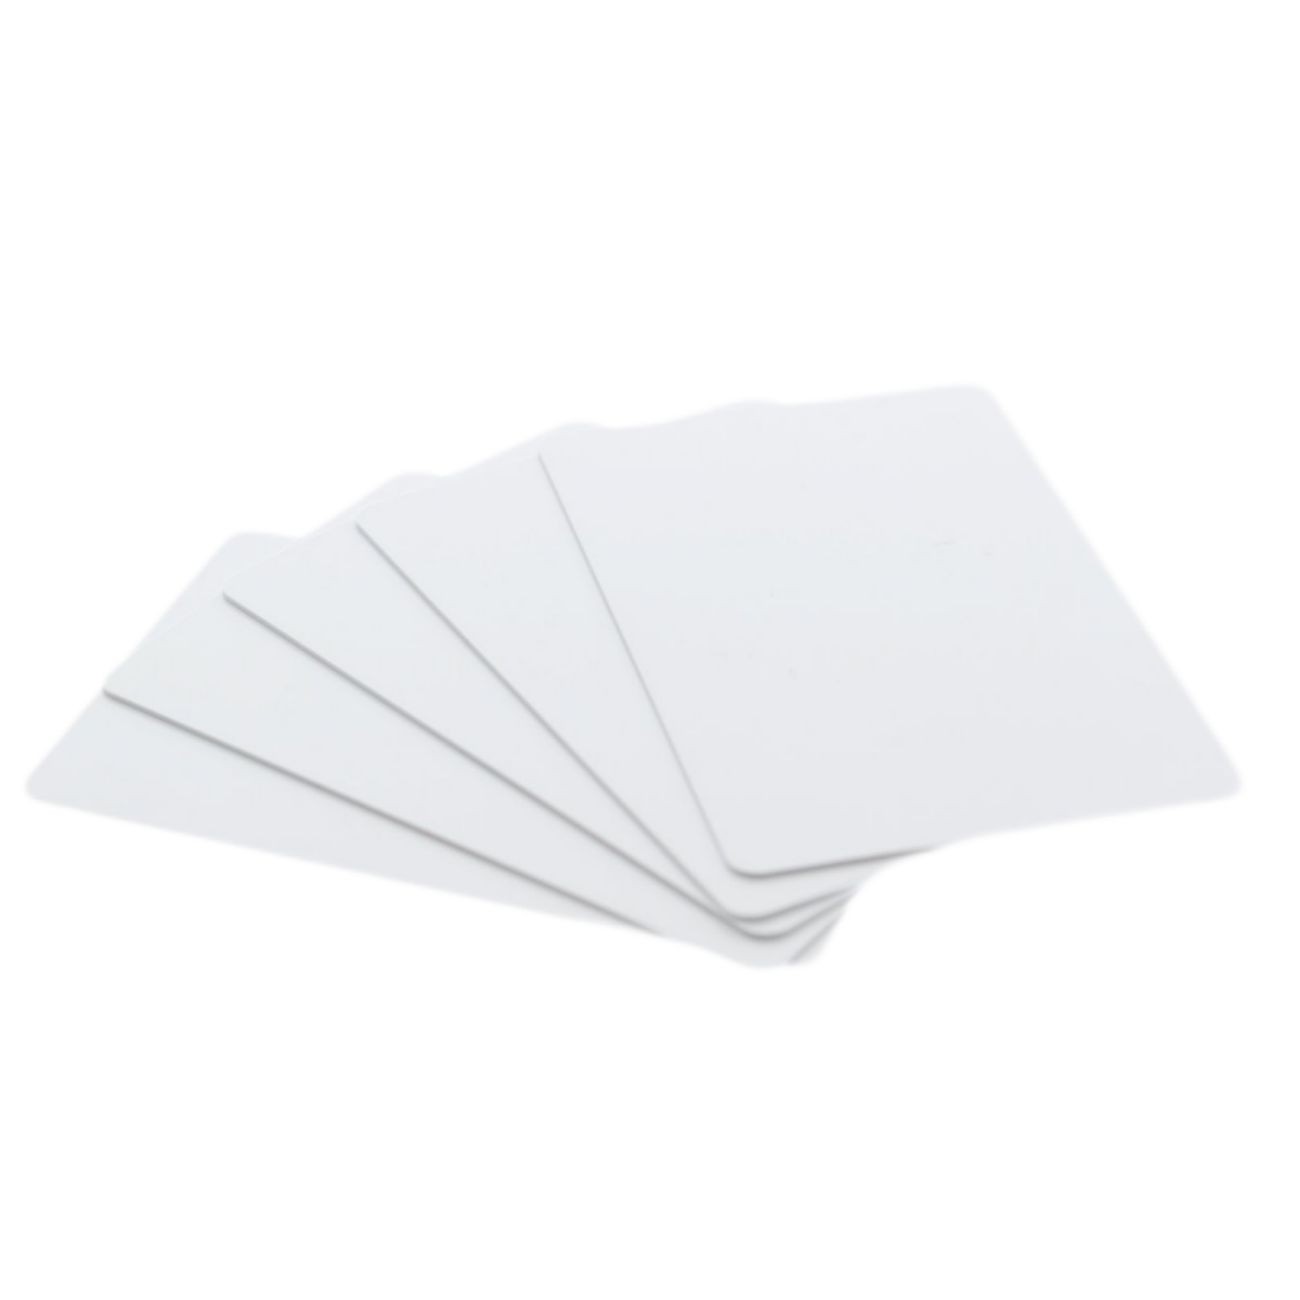 pvc sheet for plastic card